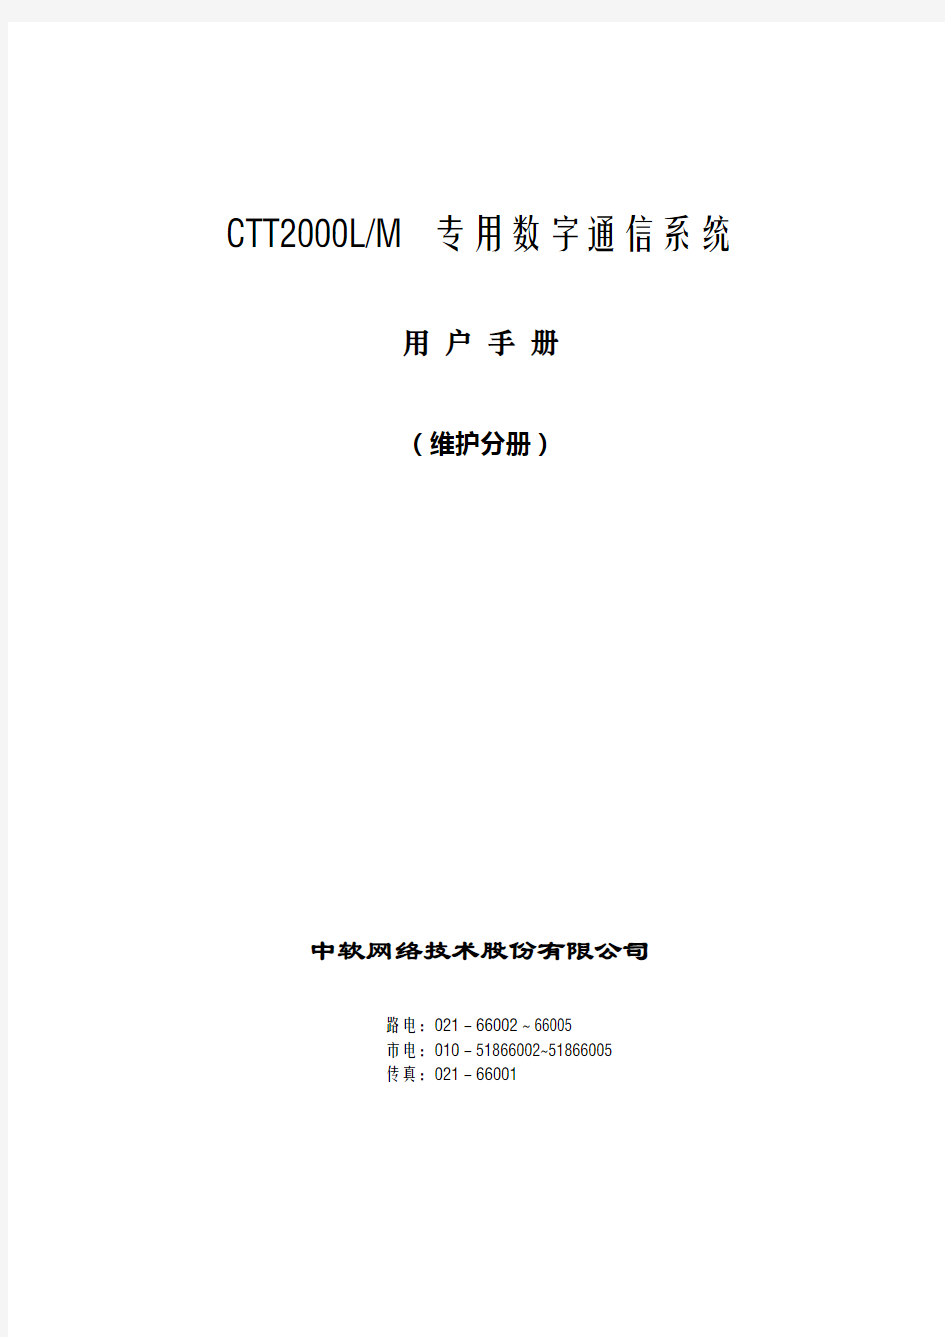 CTT2000LM用户手册(维护分册)